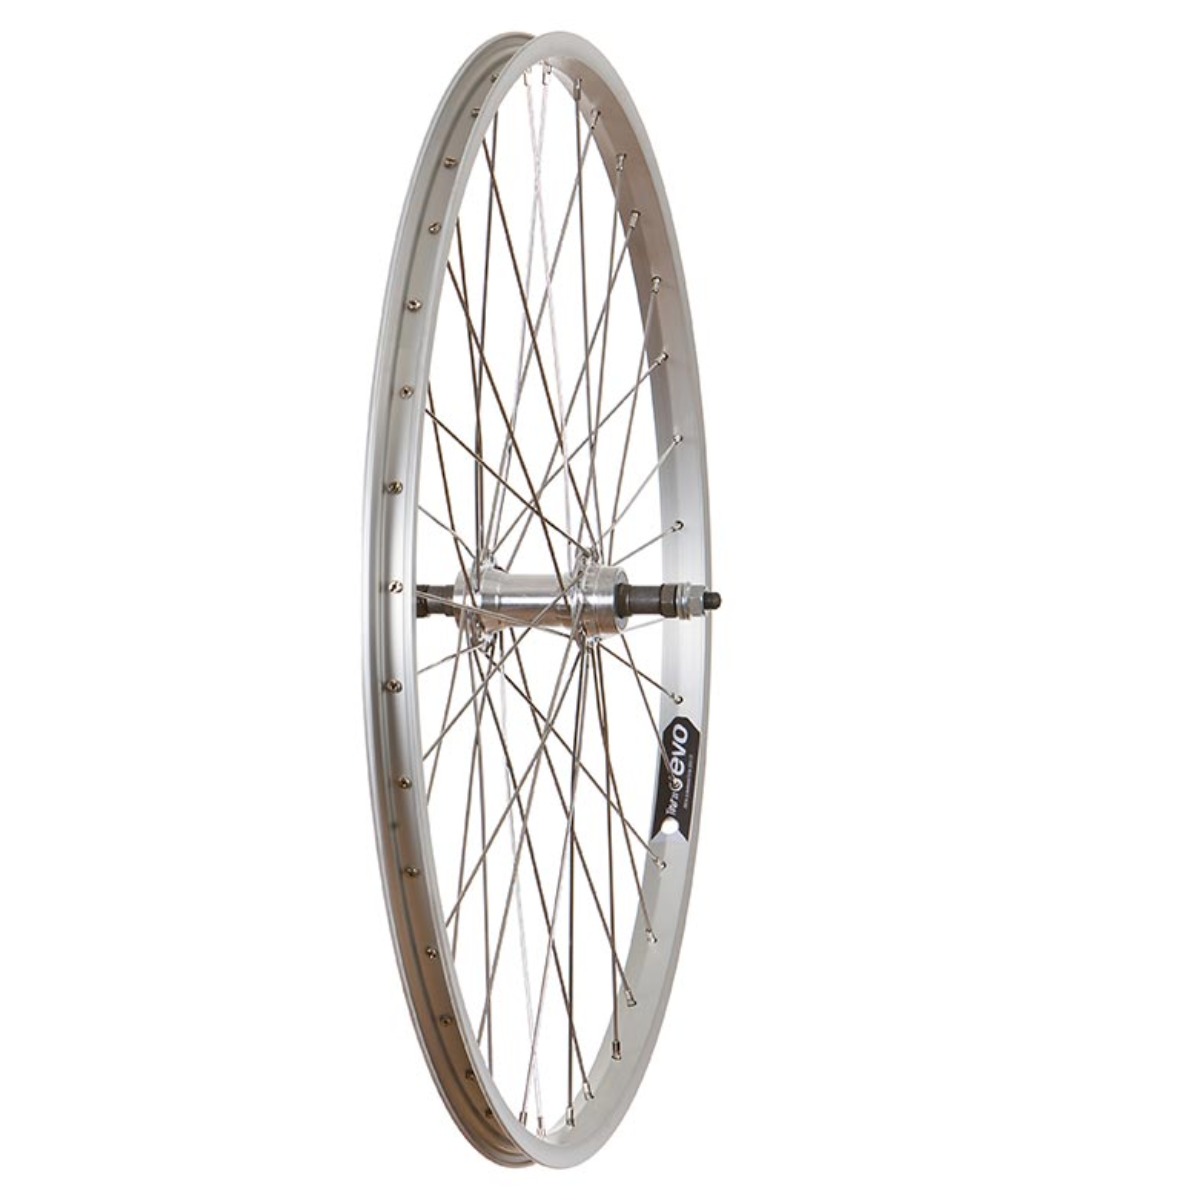 Evo Tour 20 Rear Wheel - Silver